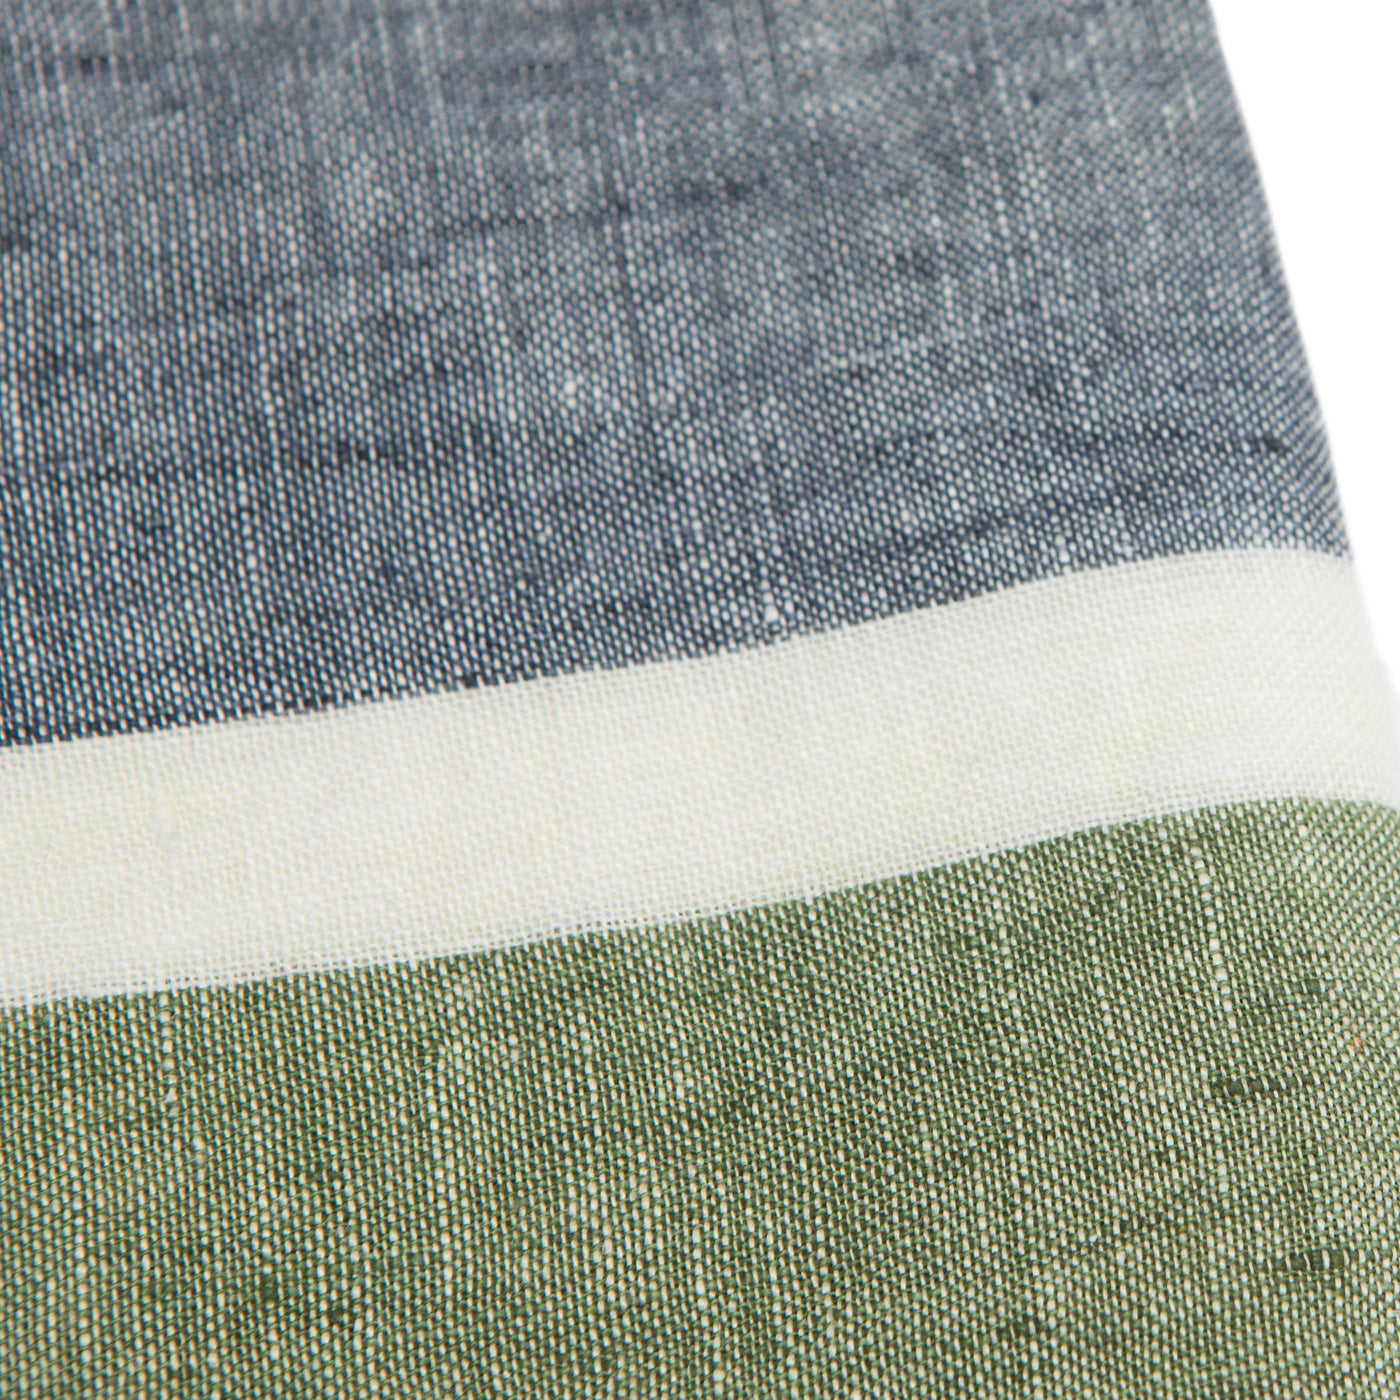 Bold Stripe Linen Evergreen Kitchen Towels - Set of 2